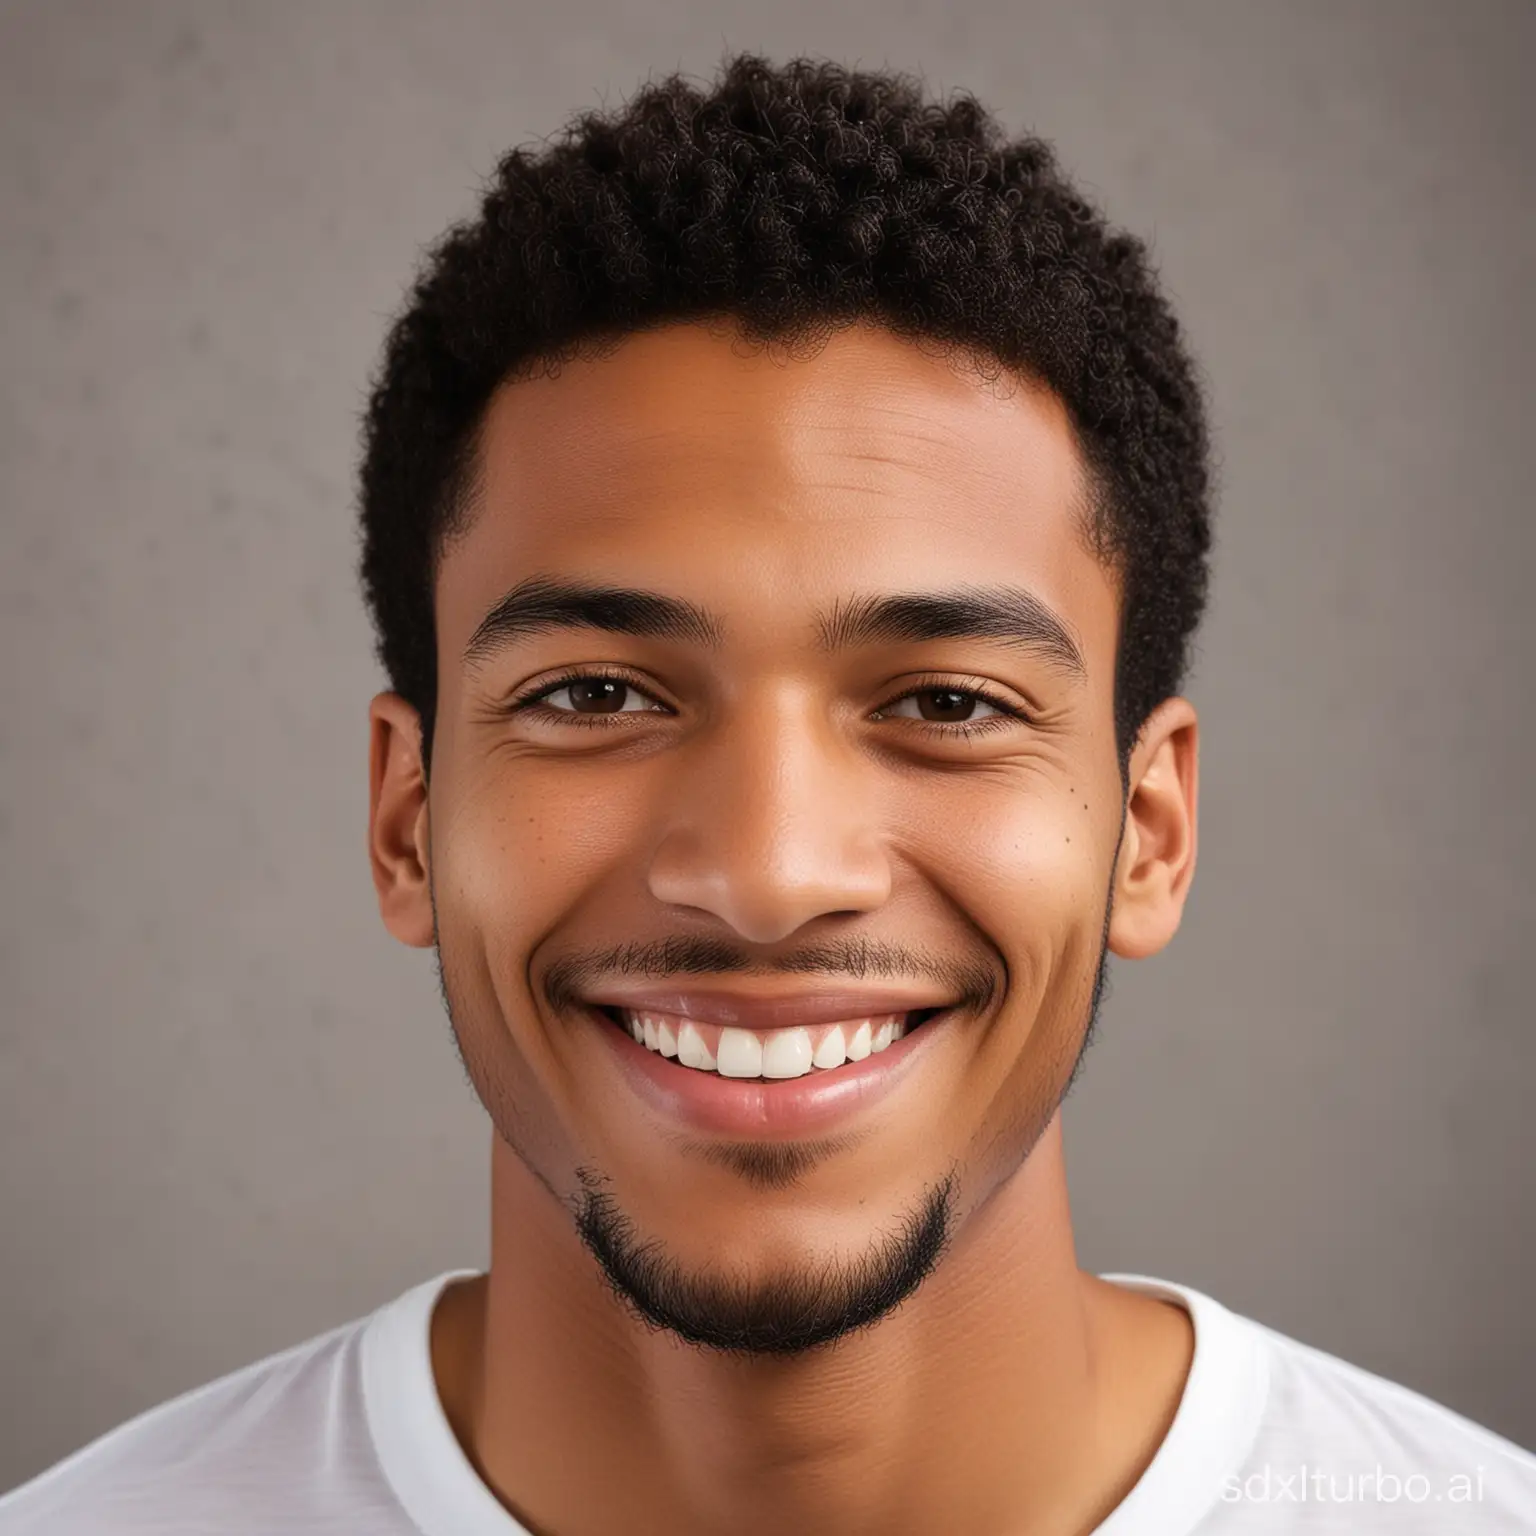 Smiling-Mixed-Race-Jamaican-British-Male-Portrait